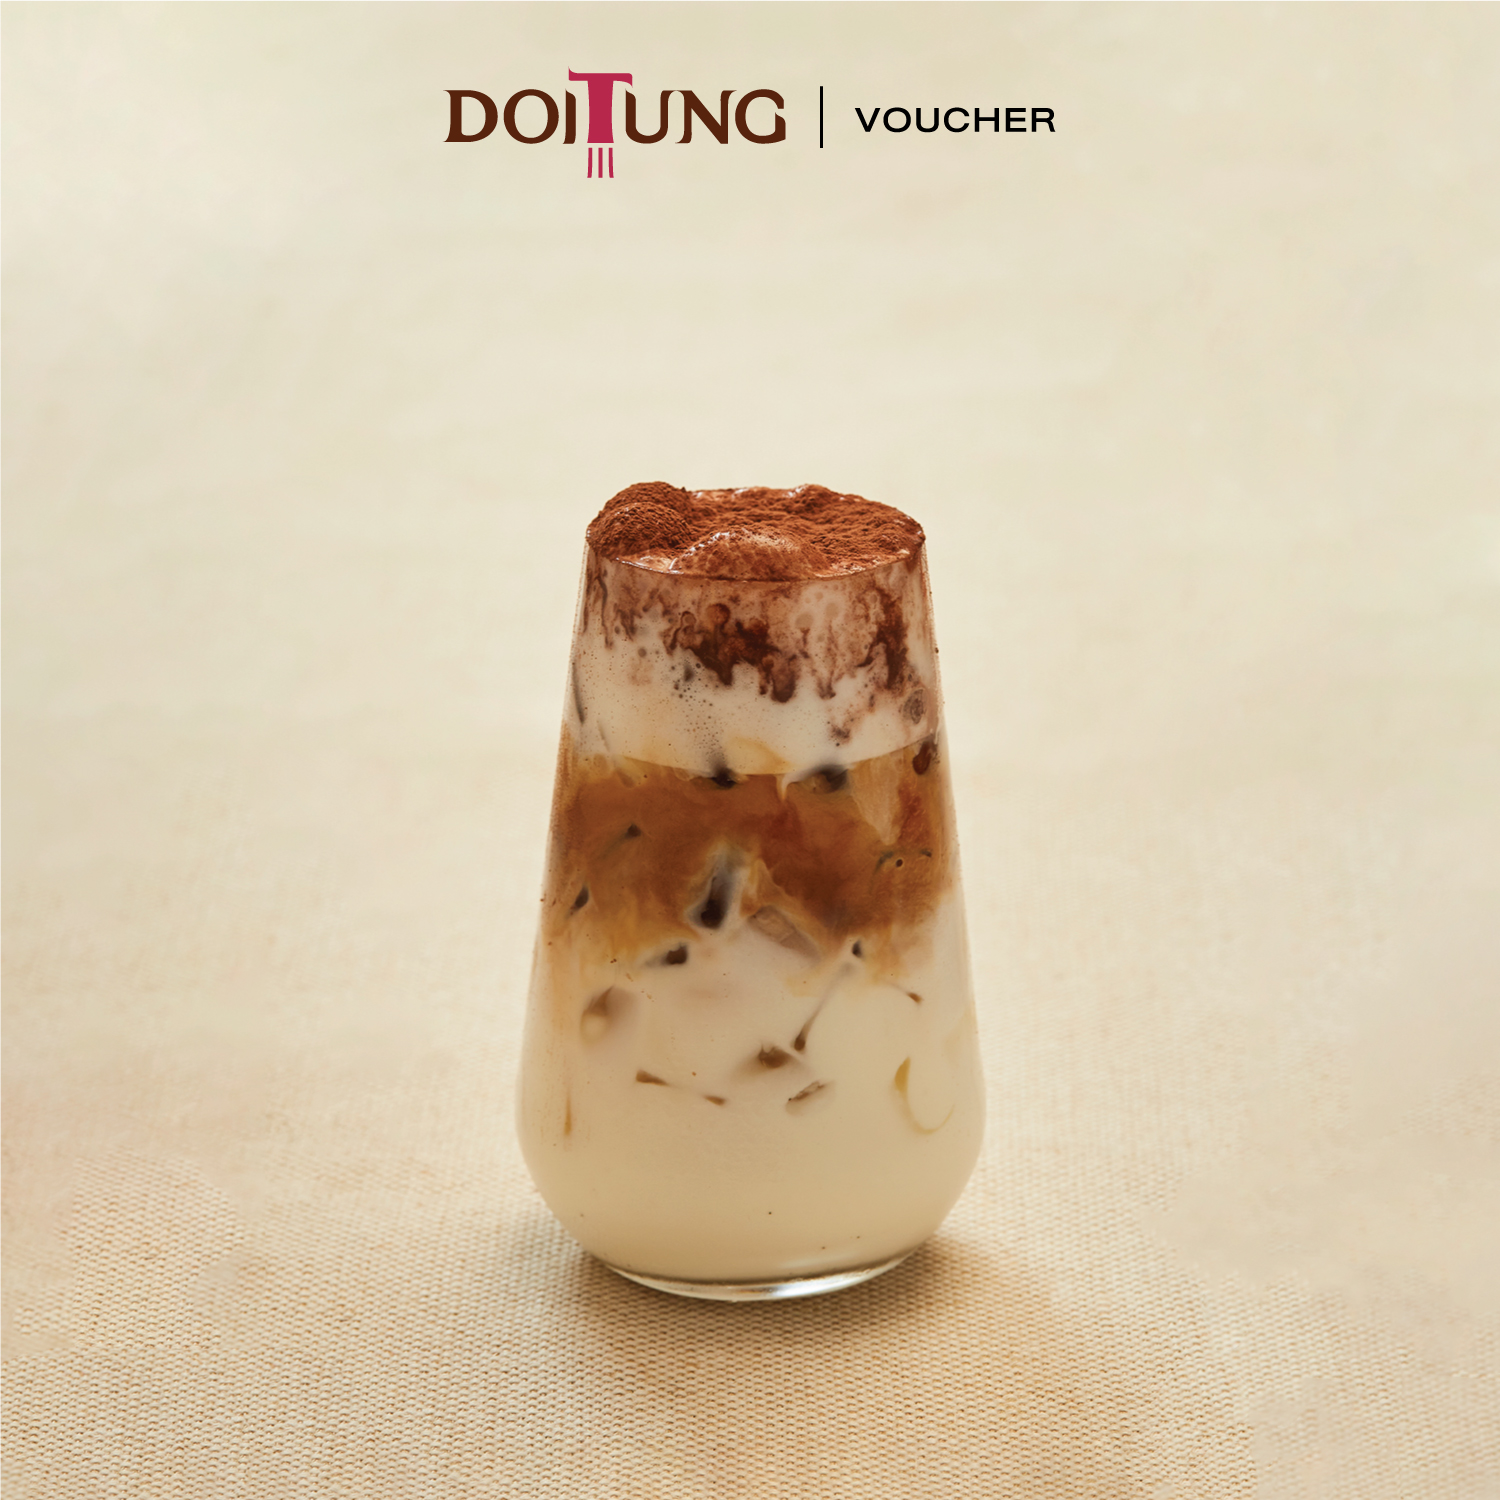 [E-Voucher] เมนูยอดนิยม 1 แก้ว คาเฟ่ดอยตุง Cafe DoiTung